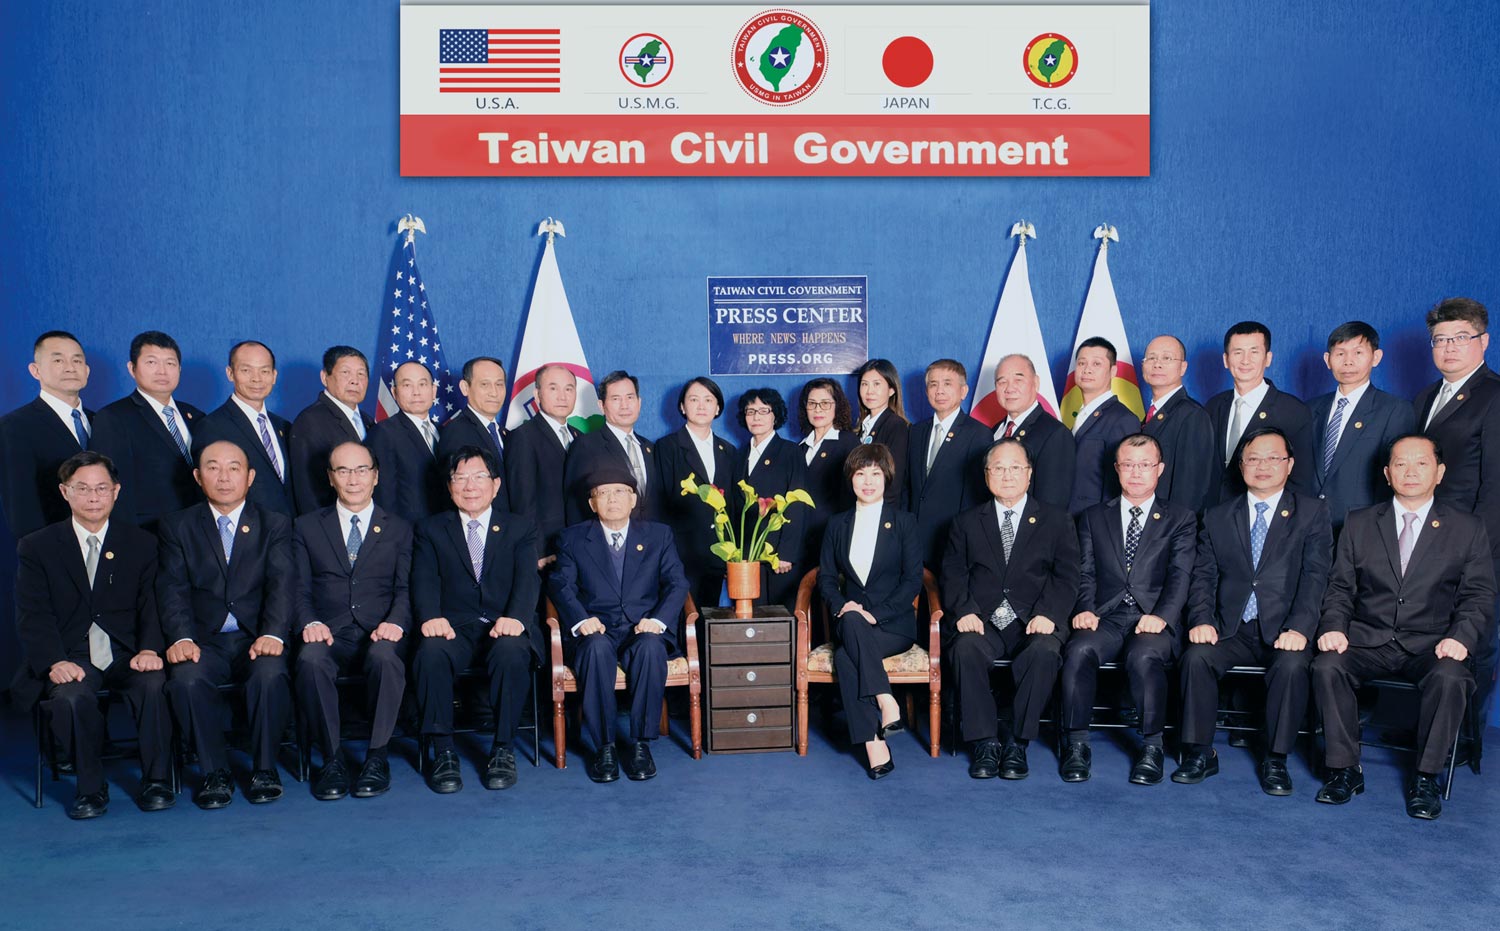 Taiwan Civil Government